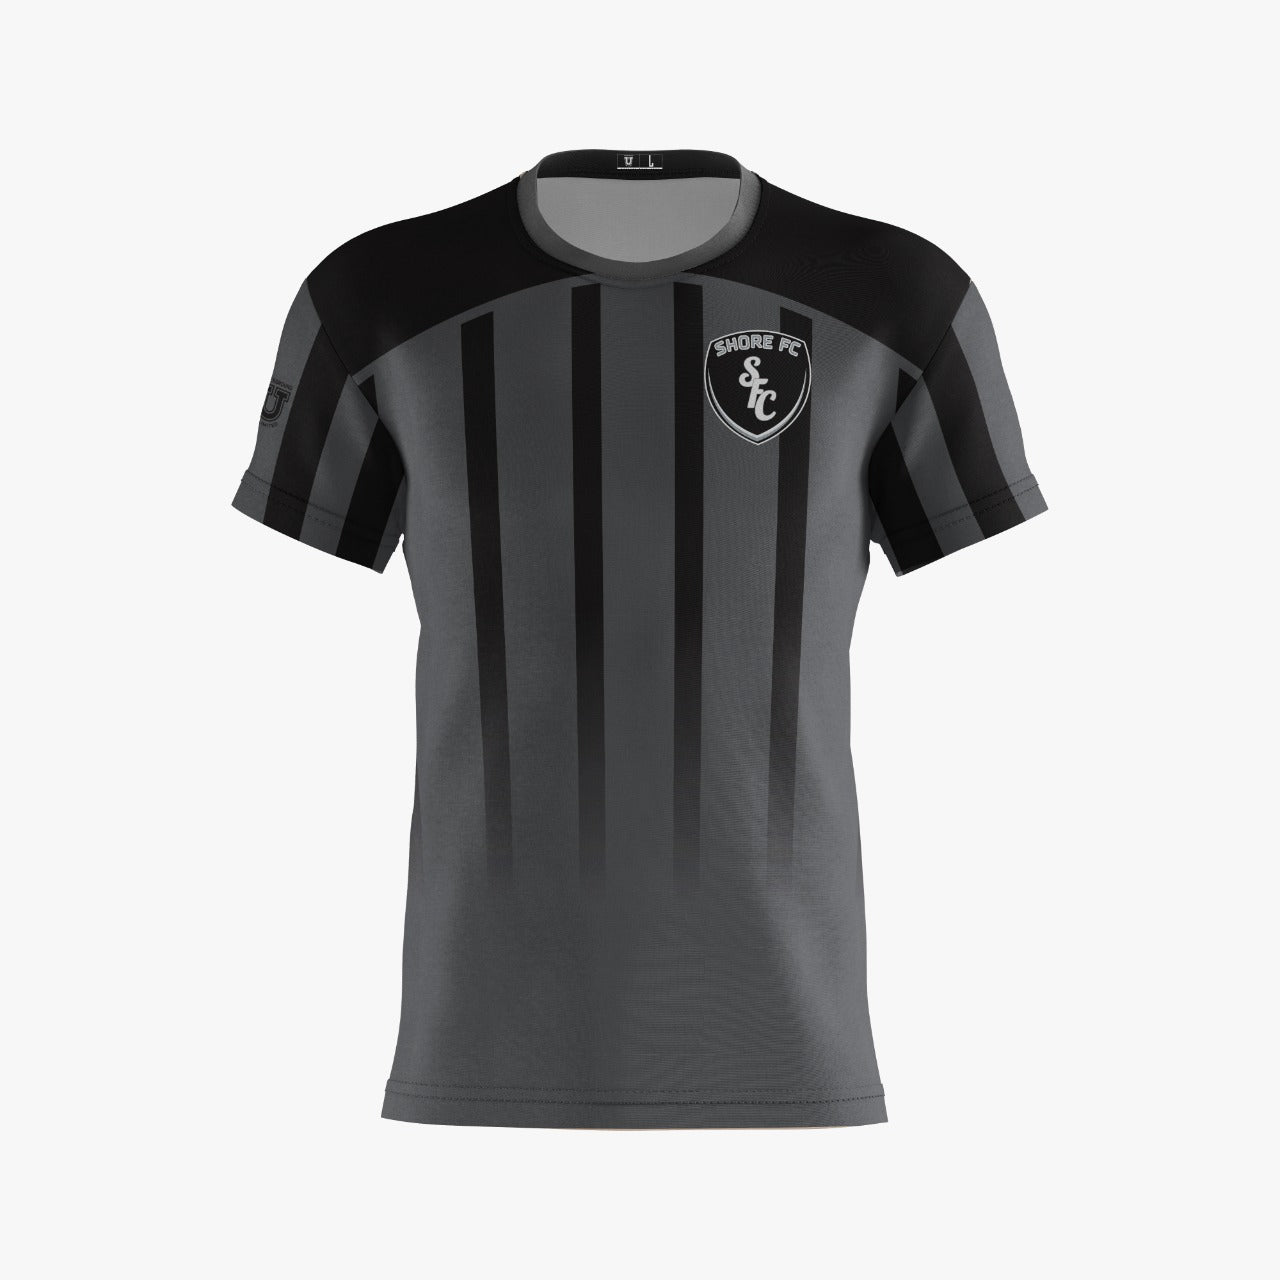 Shore FC Performance Dri Tech Shirt ~ Vertical Stripe Fade